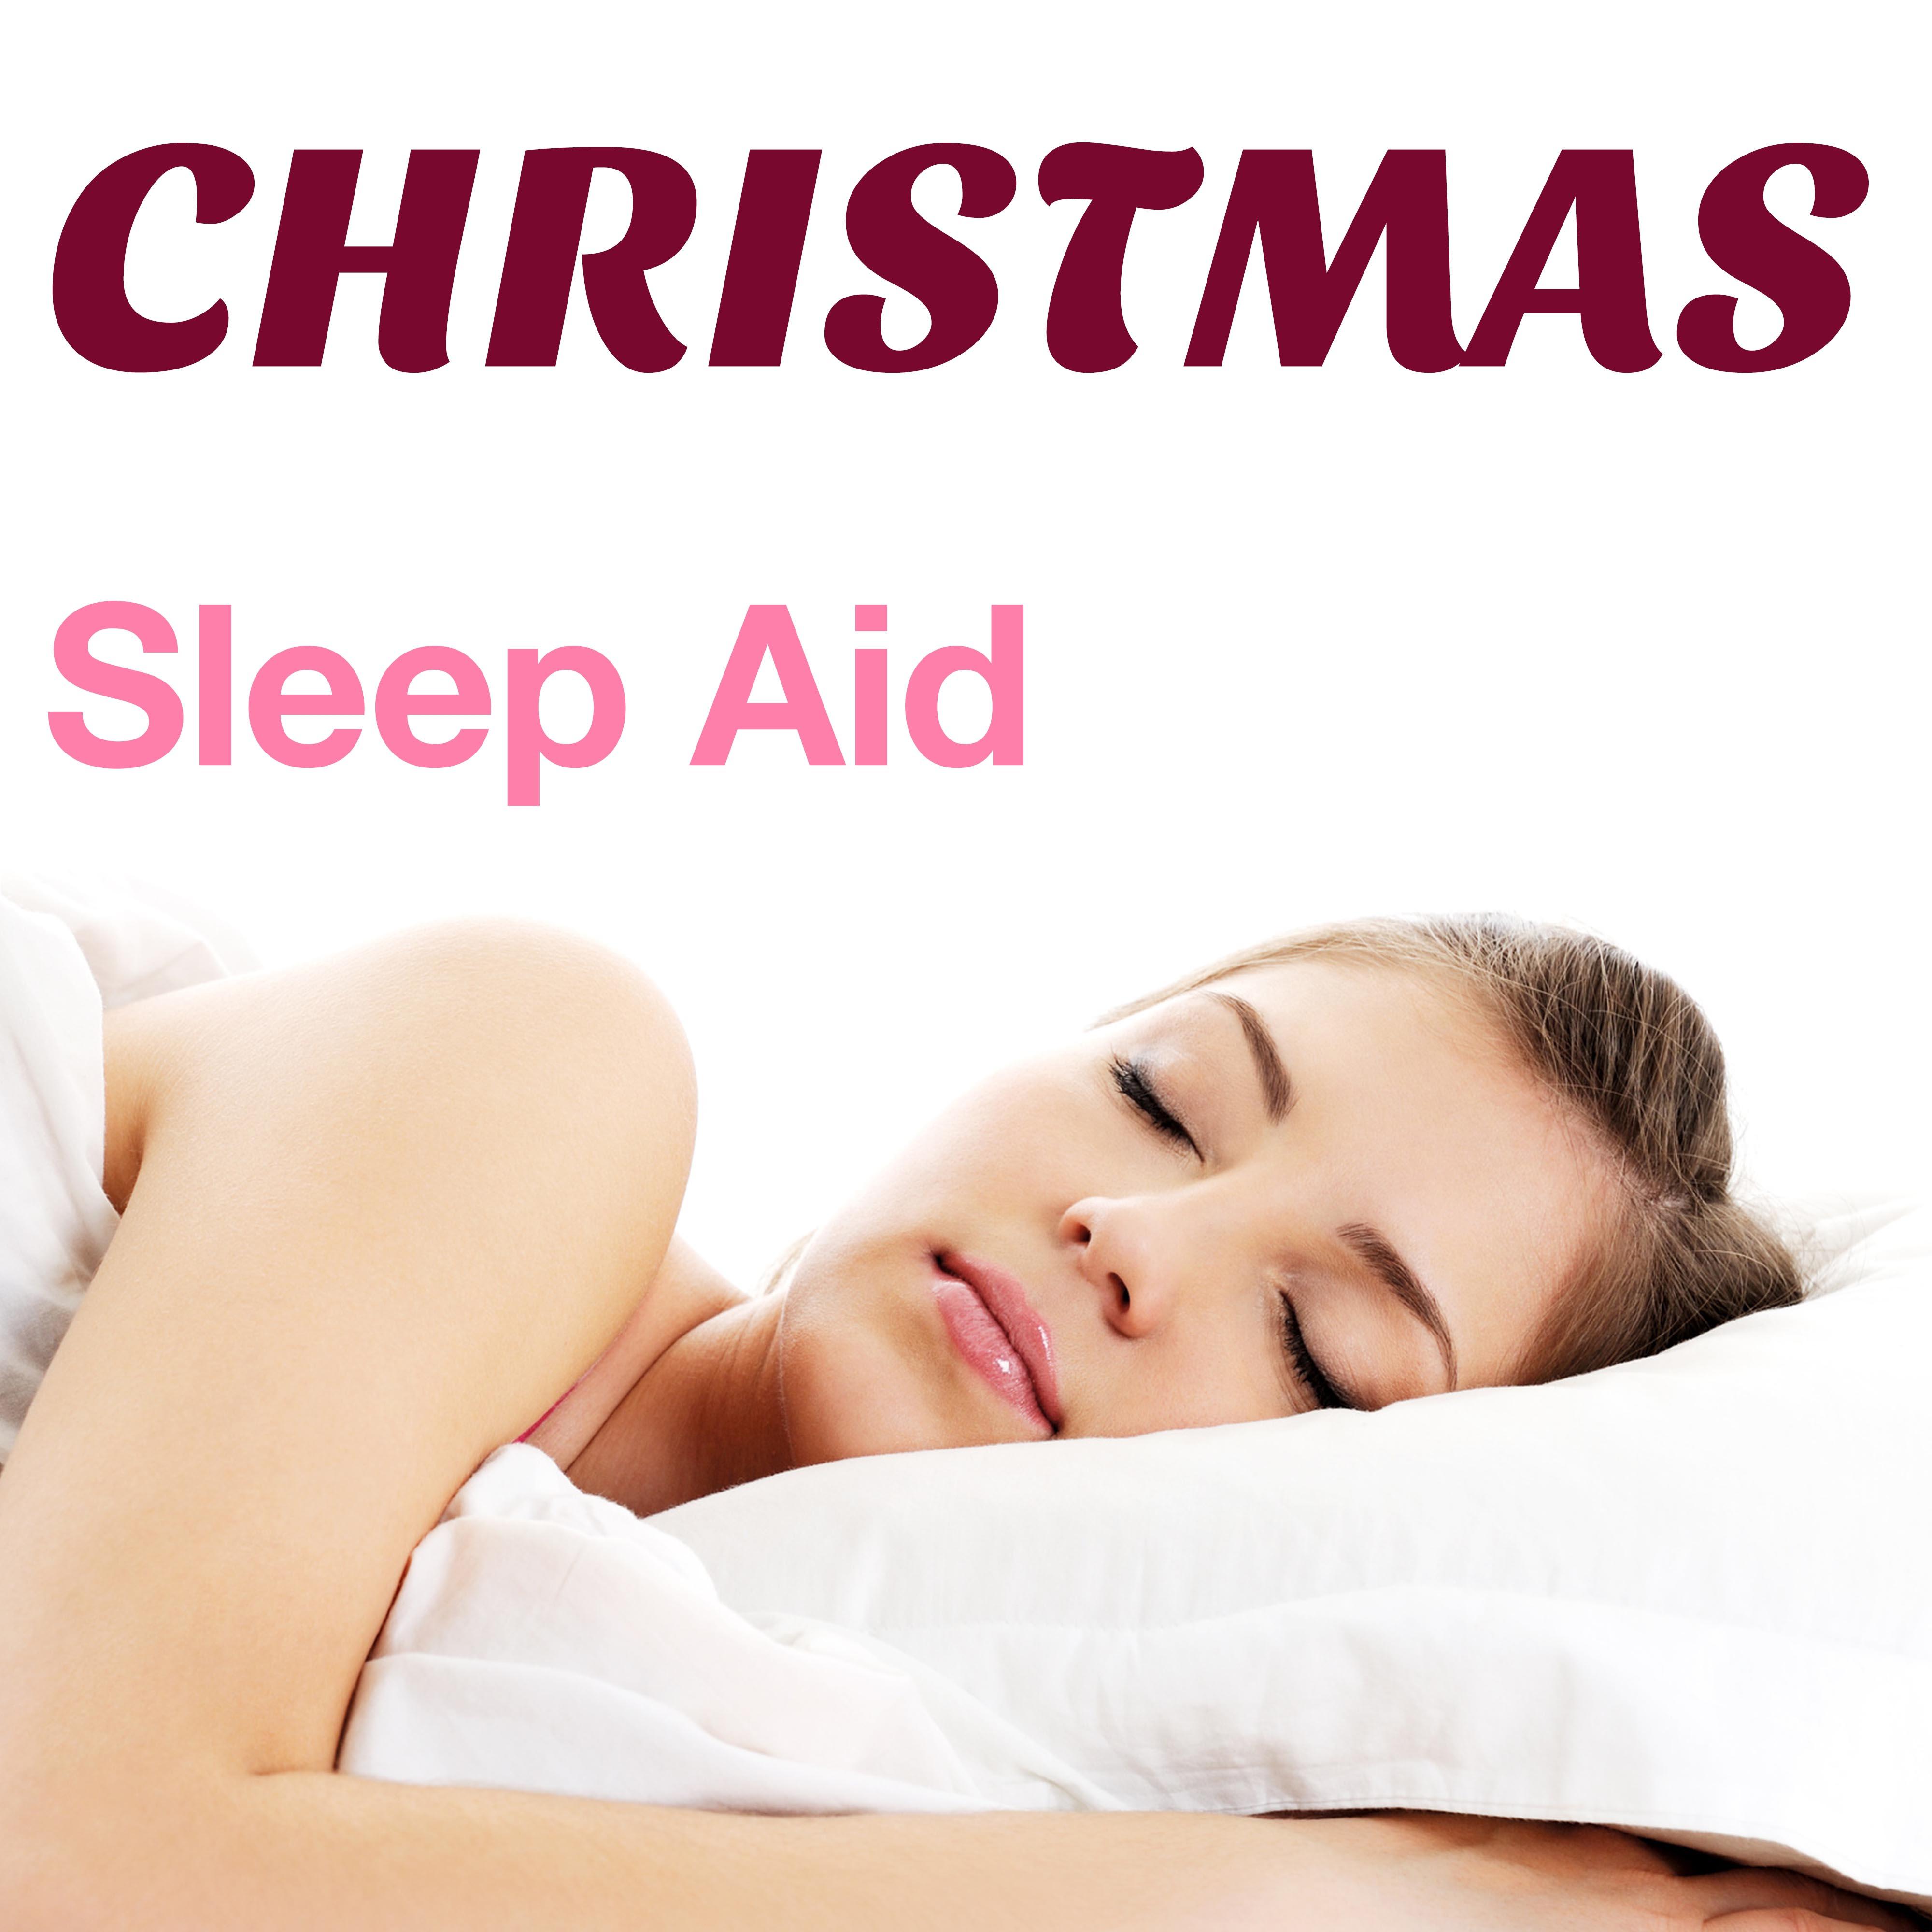 Christmas Sleep Aid: Sleepy Sounds with New Age Tracks for Getting a Good Night's Sleep